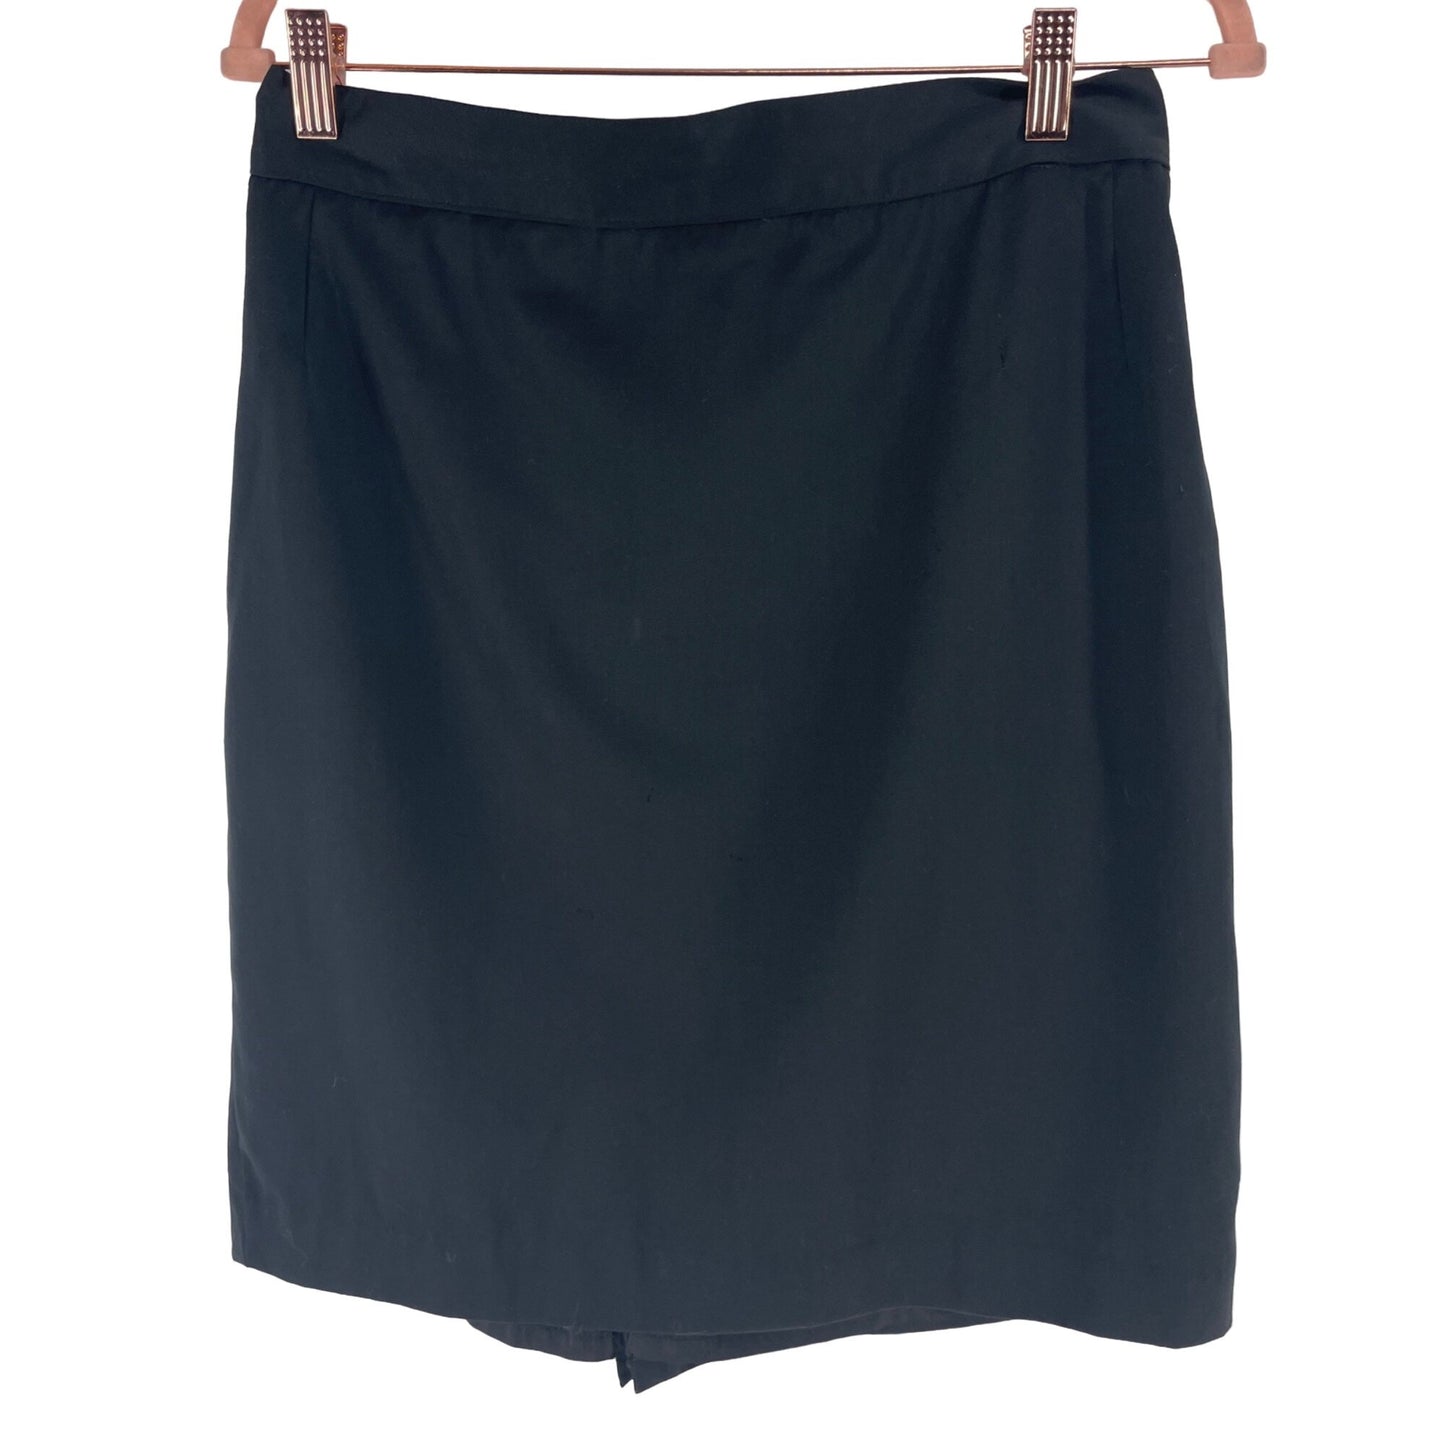 Genny Women's Large Black Midi Skirt